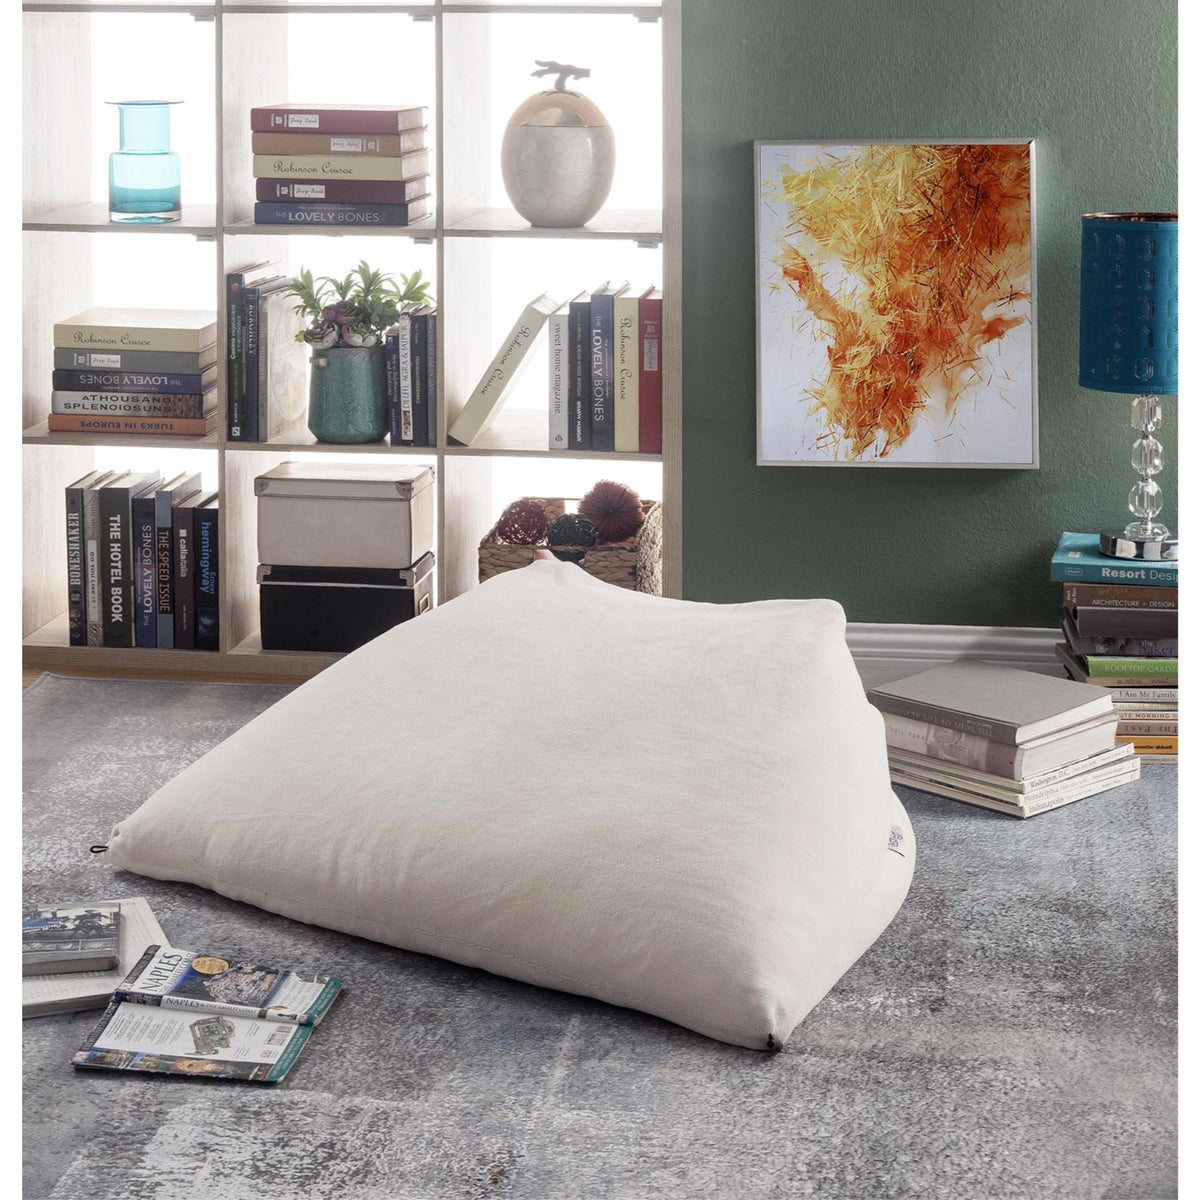 Bean Bag Chair/Ottoman/Floor Pillow 3-in-1 - Bean Bag Chair/Ottoman/Floor Pillow 3-in-1